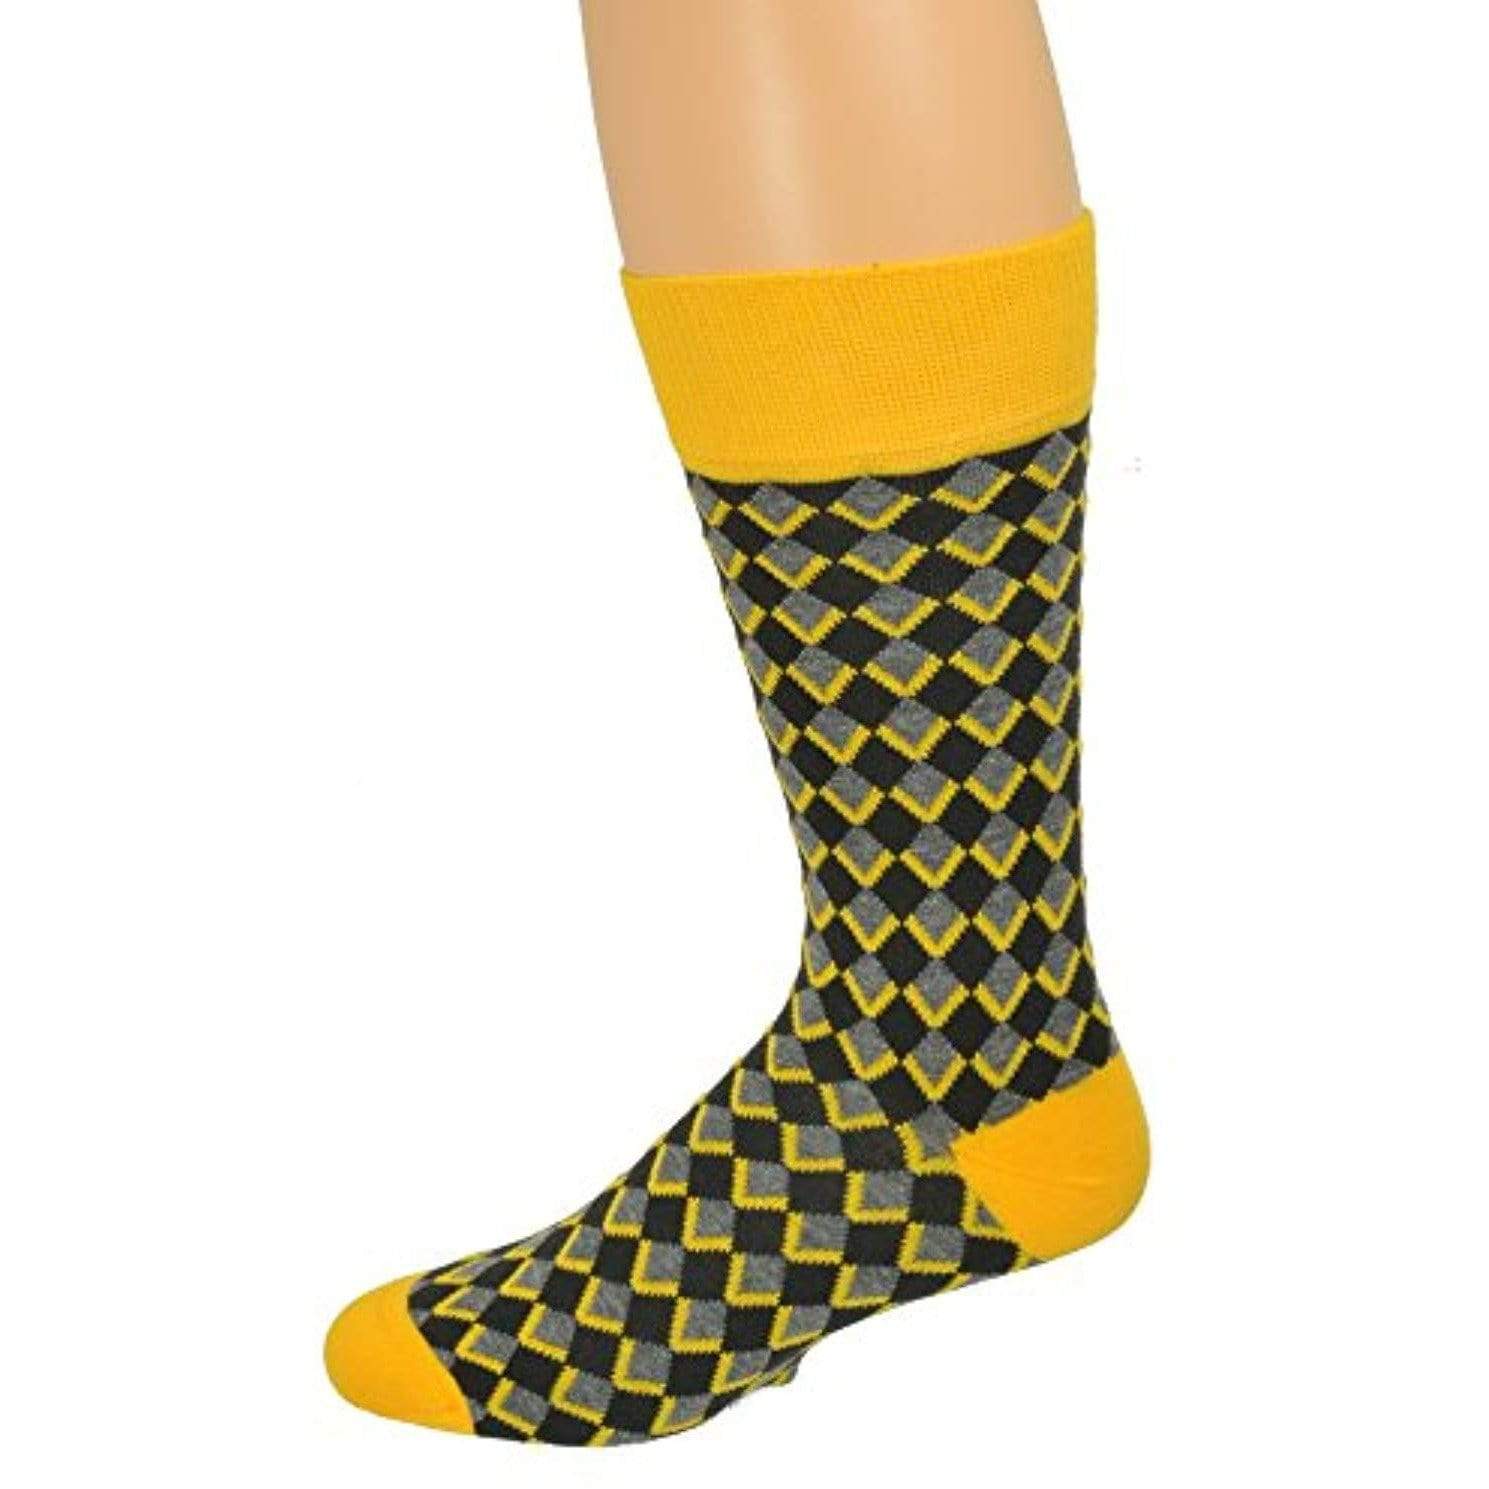 Sierra Socks Men's Casual Cotton Blend Fashion Design Mid Calf Dress Crew Socks, 2 or 3 Pairs